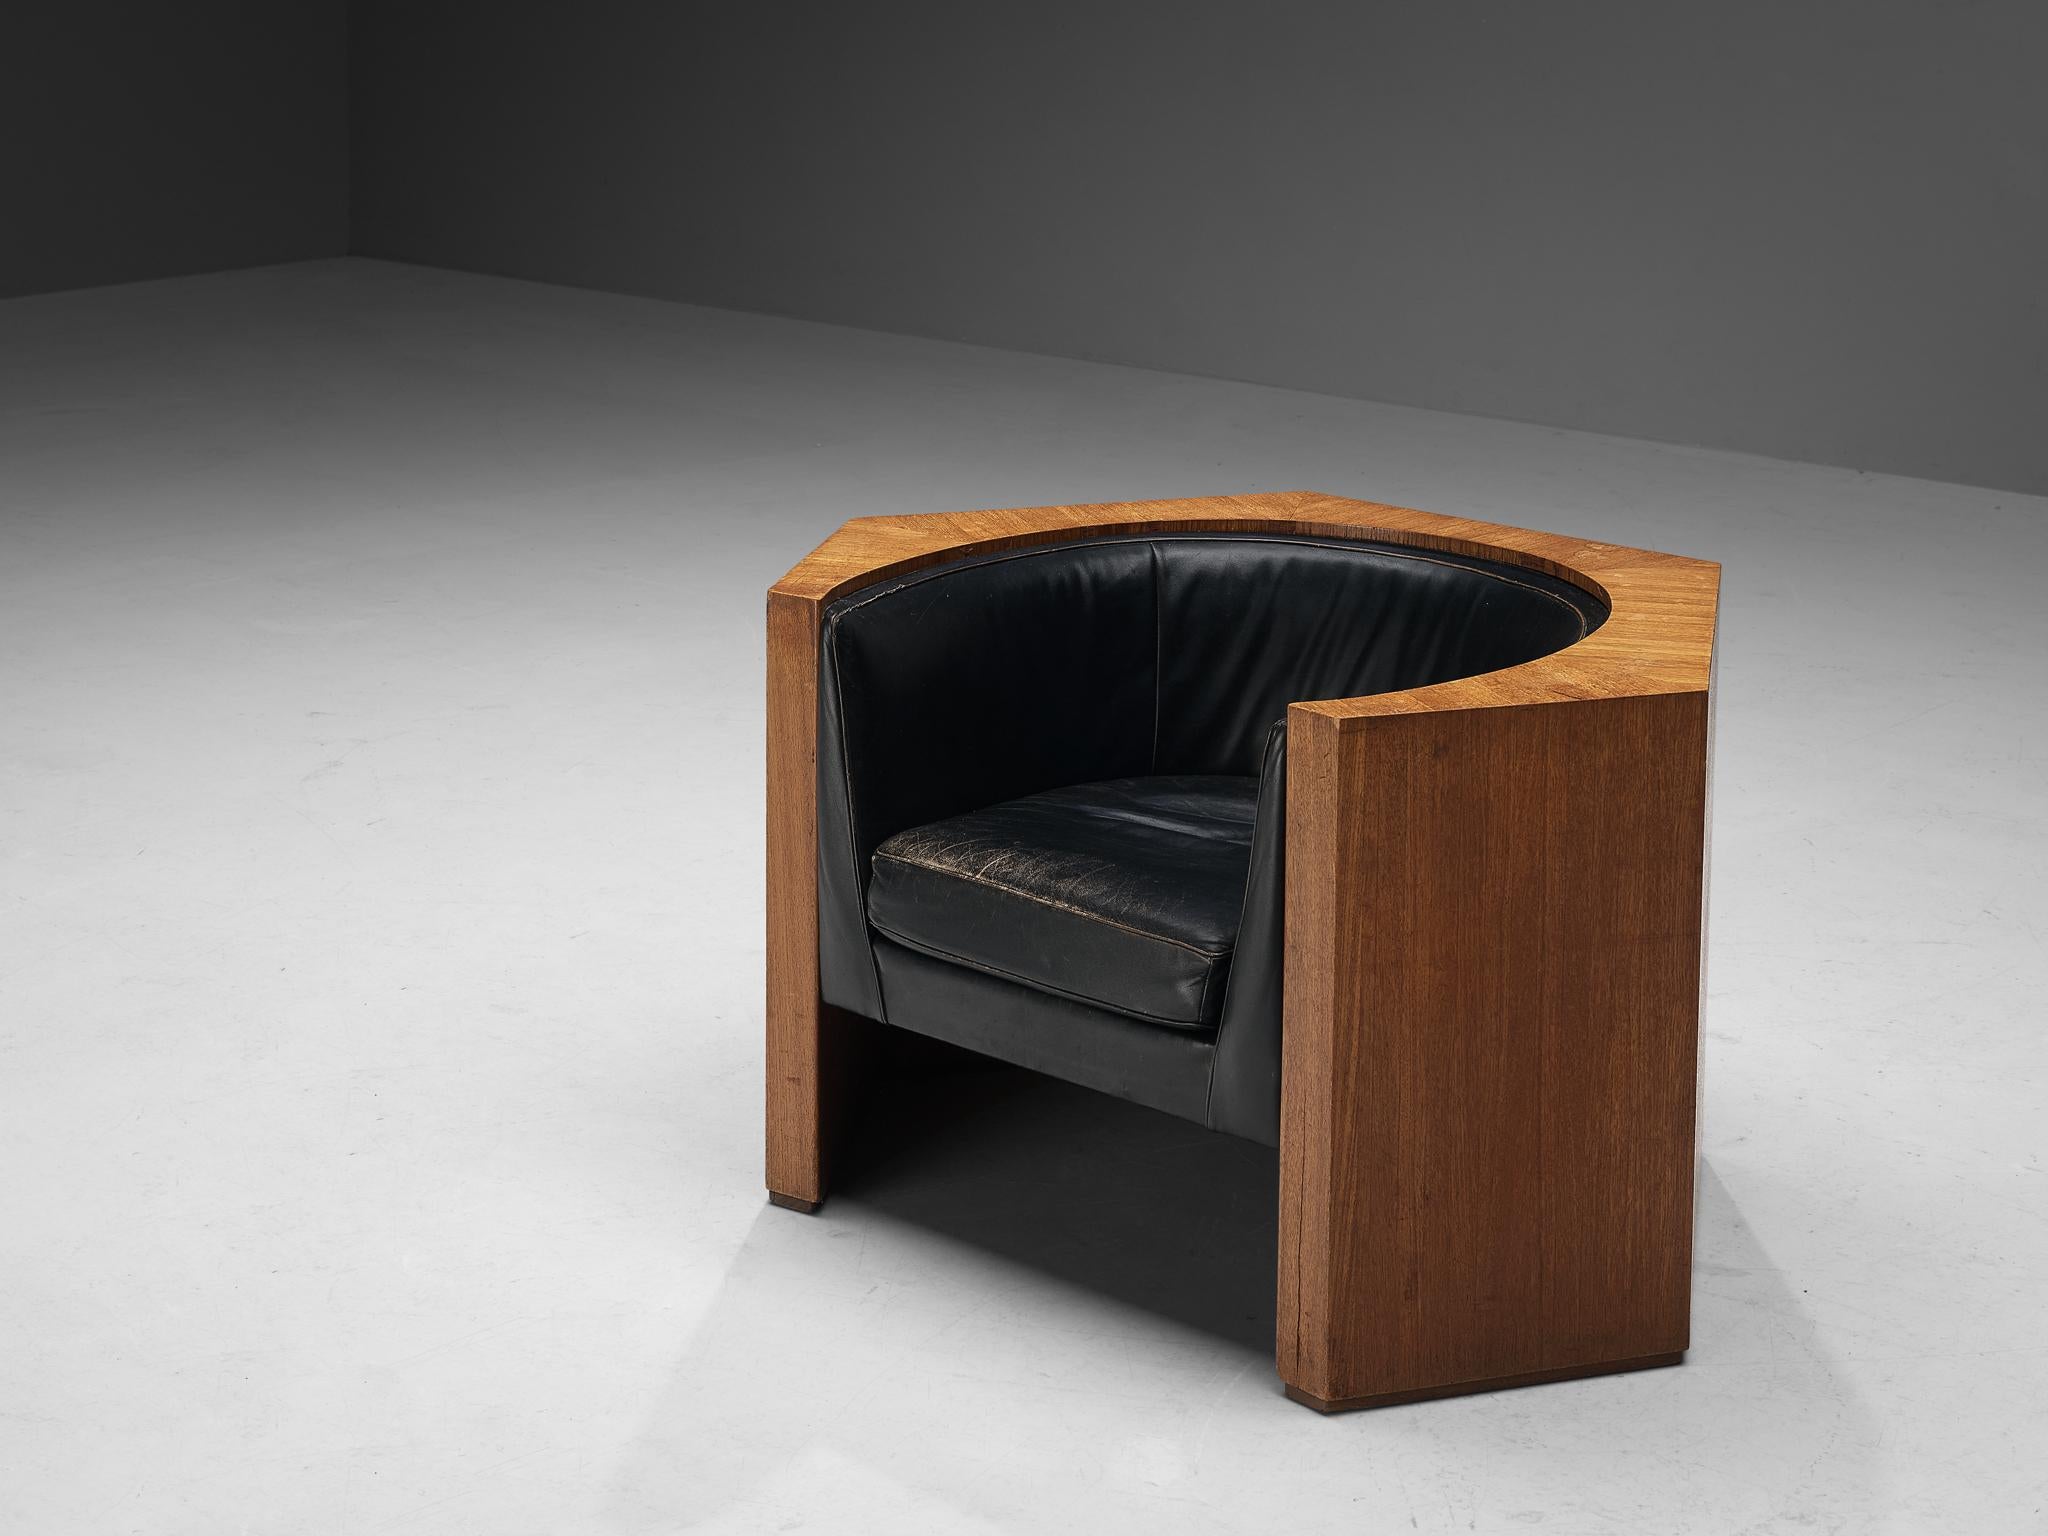 European Club Chair in Teak and Black Leather